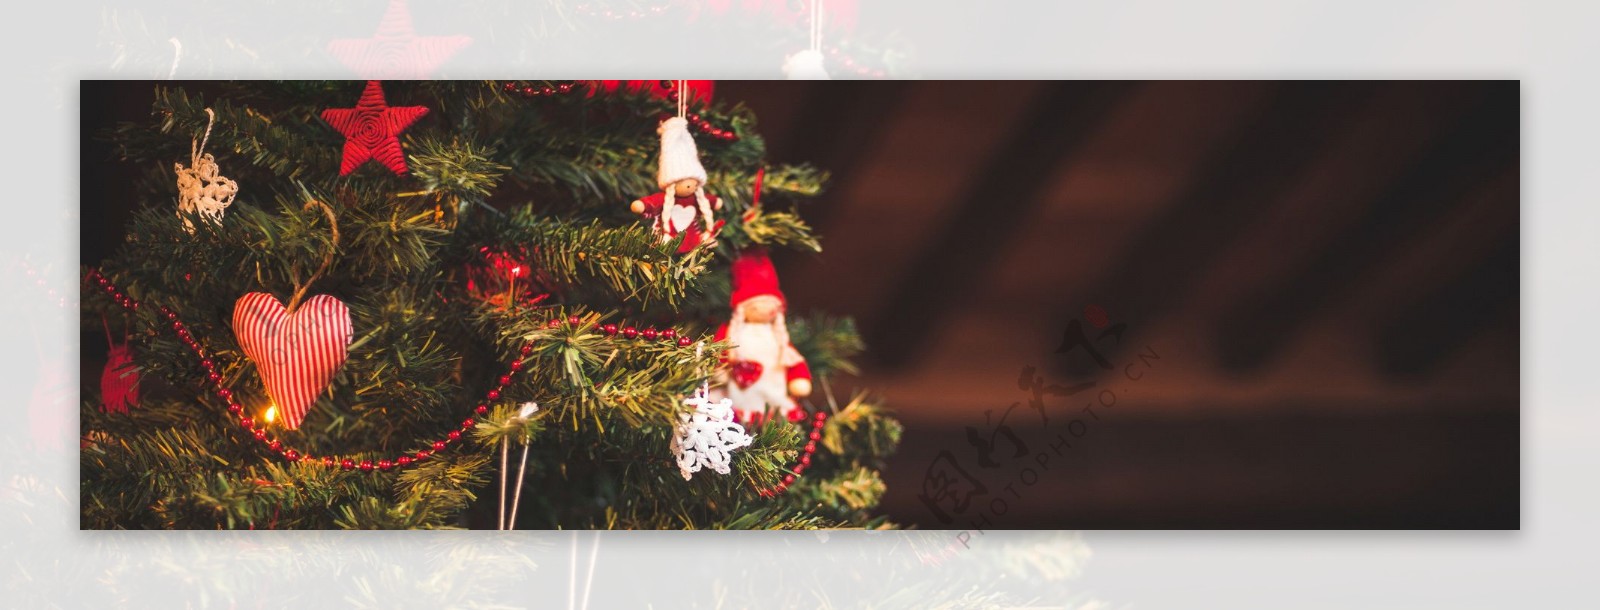 圣诞节圣诞树banner背景素材